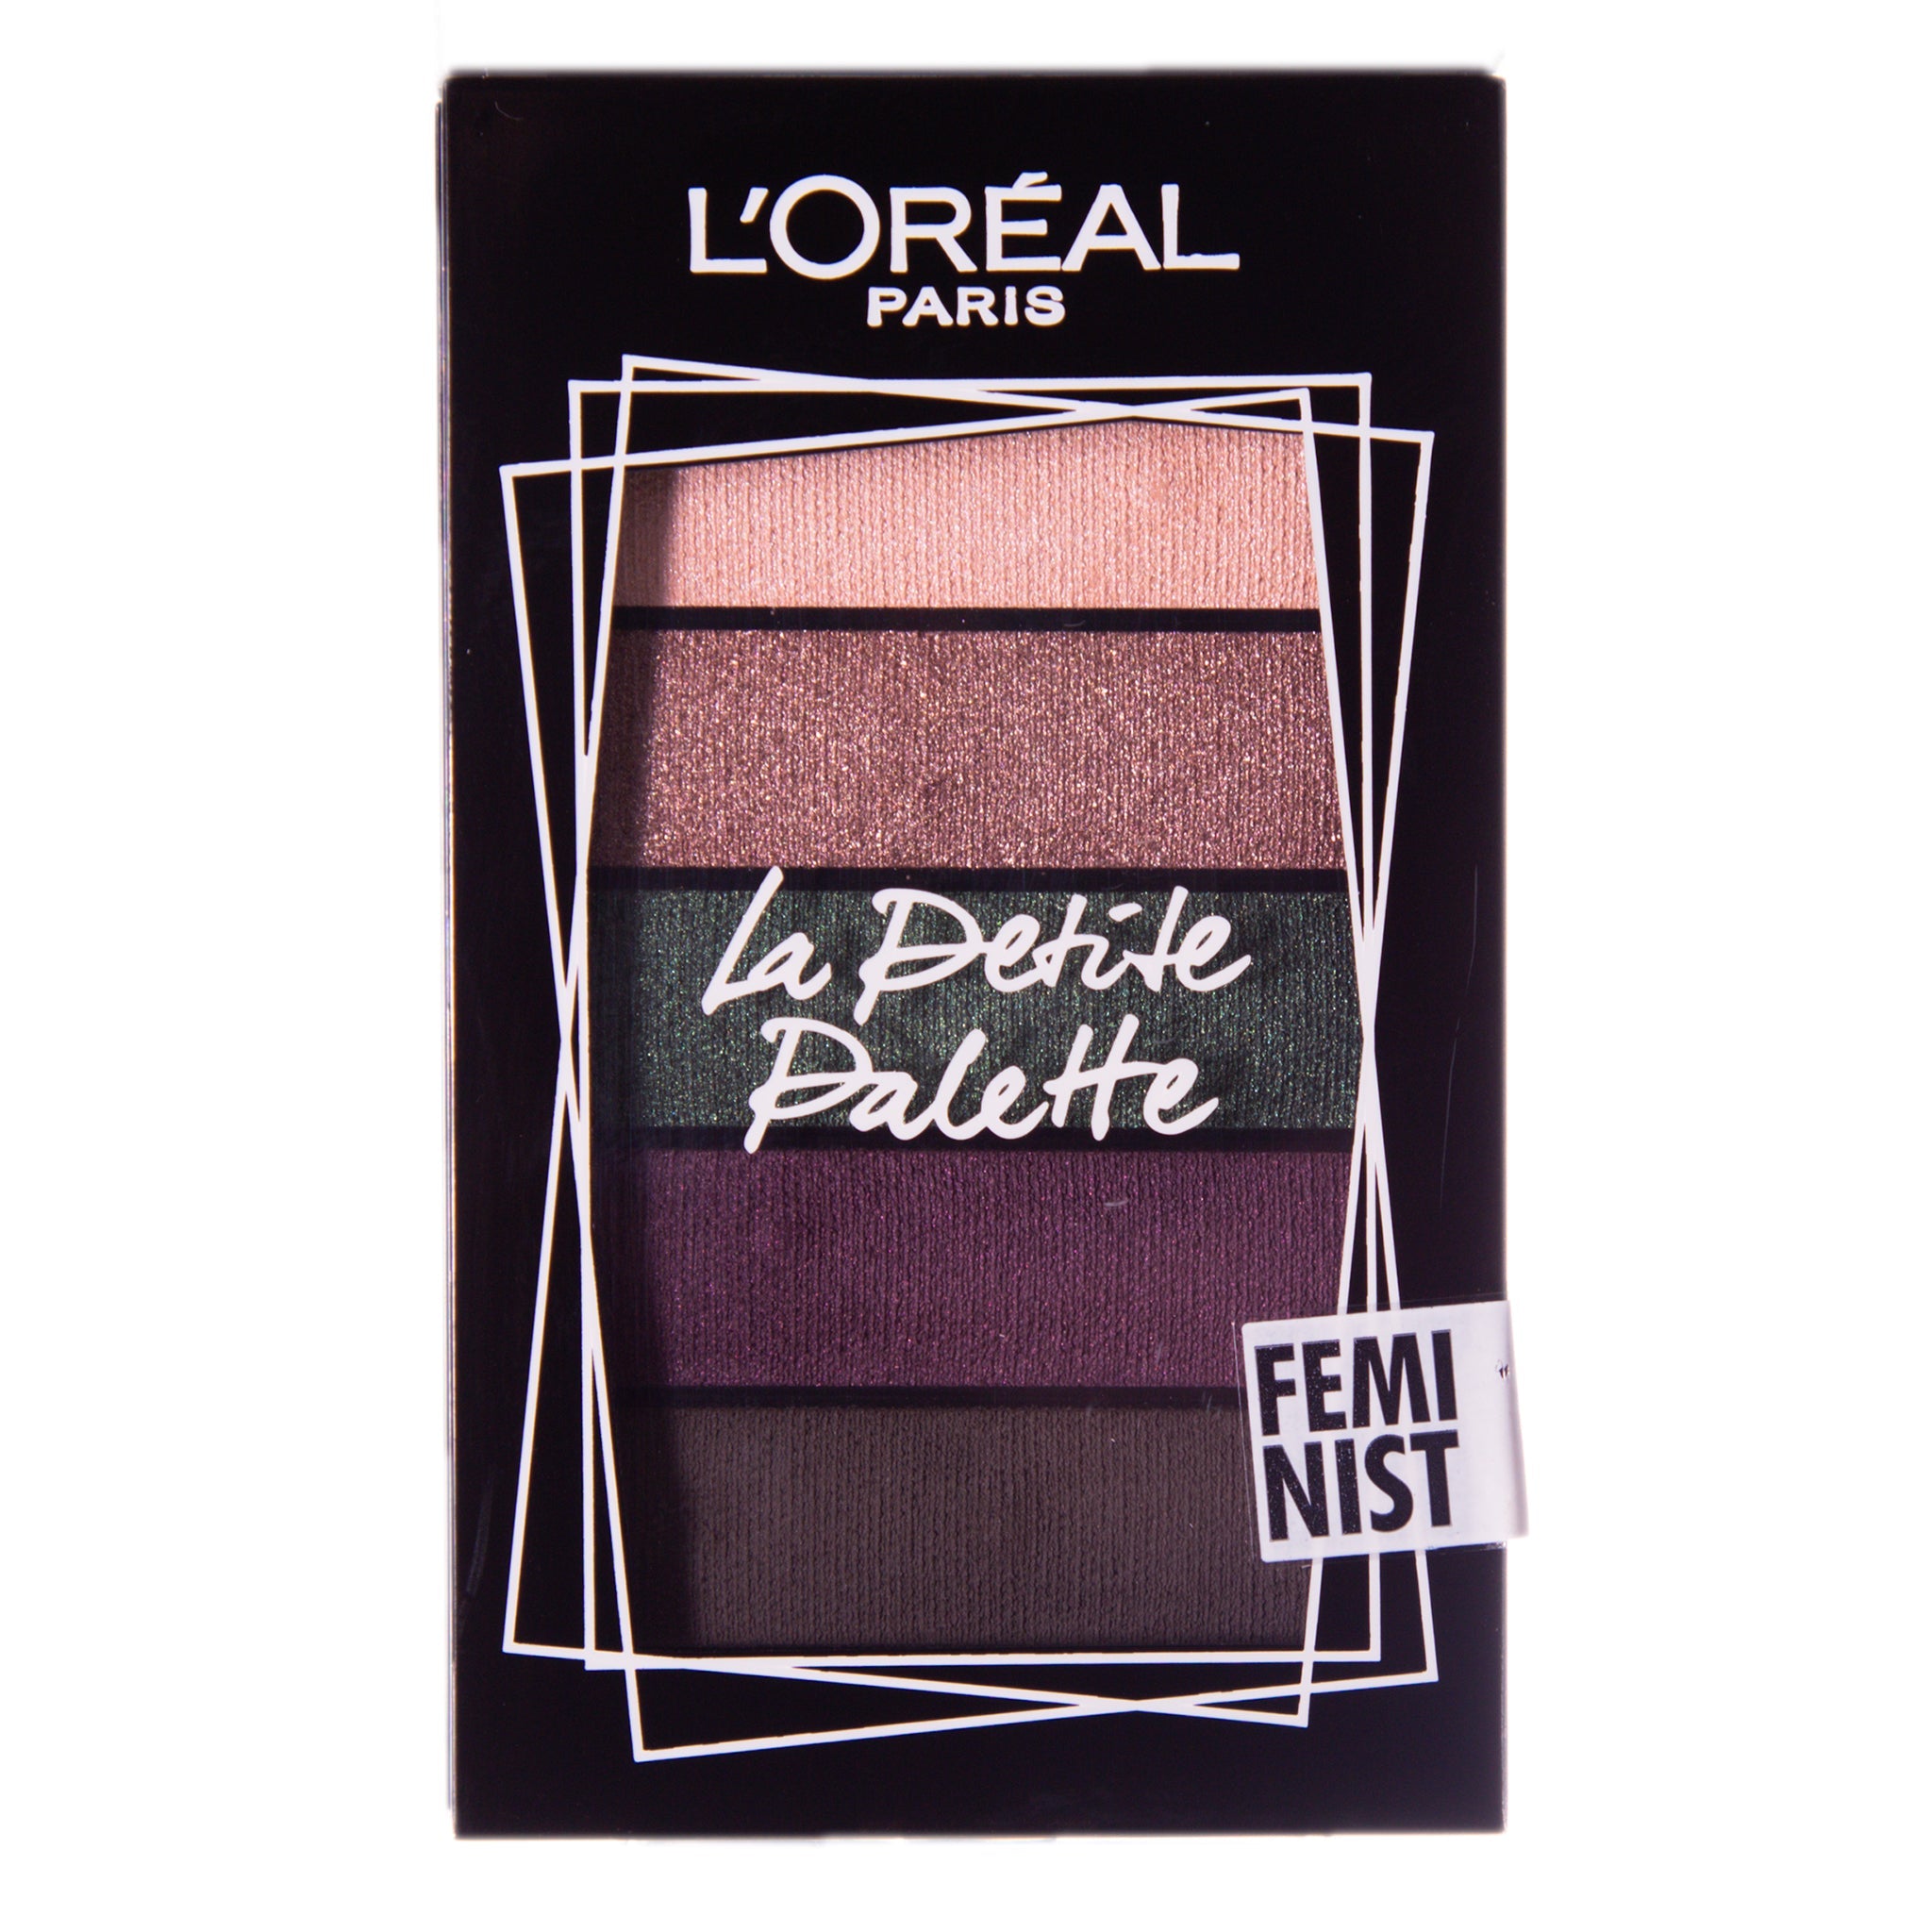 [B-GRADE] L'Oreal Paris Mini Eyeshadow Palette - Feminist